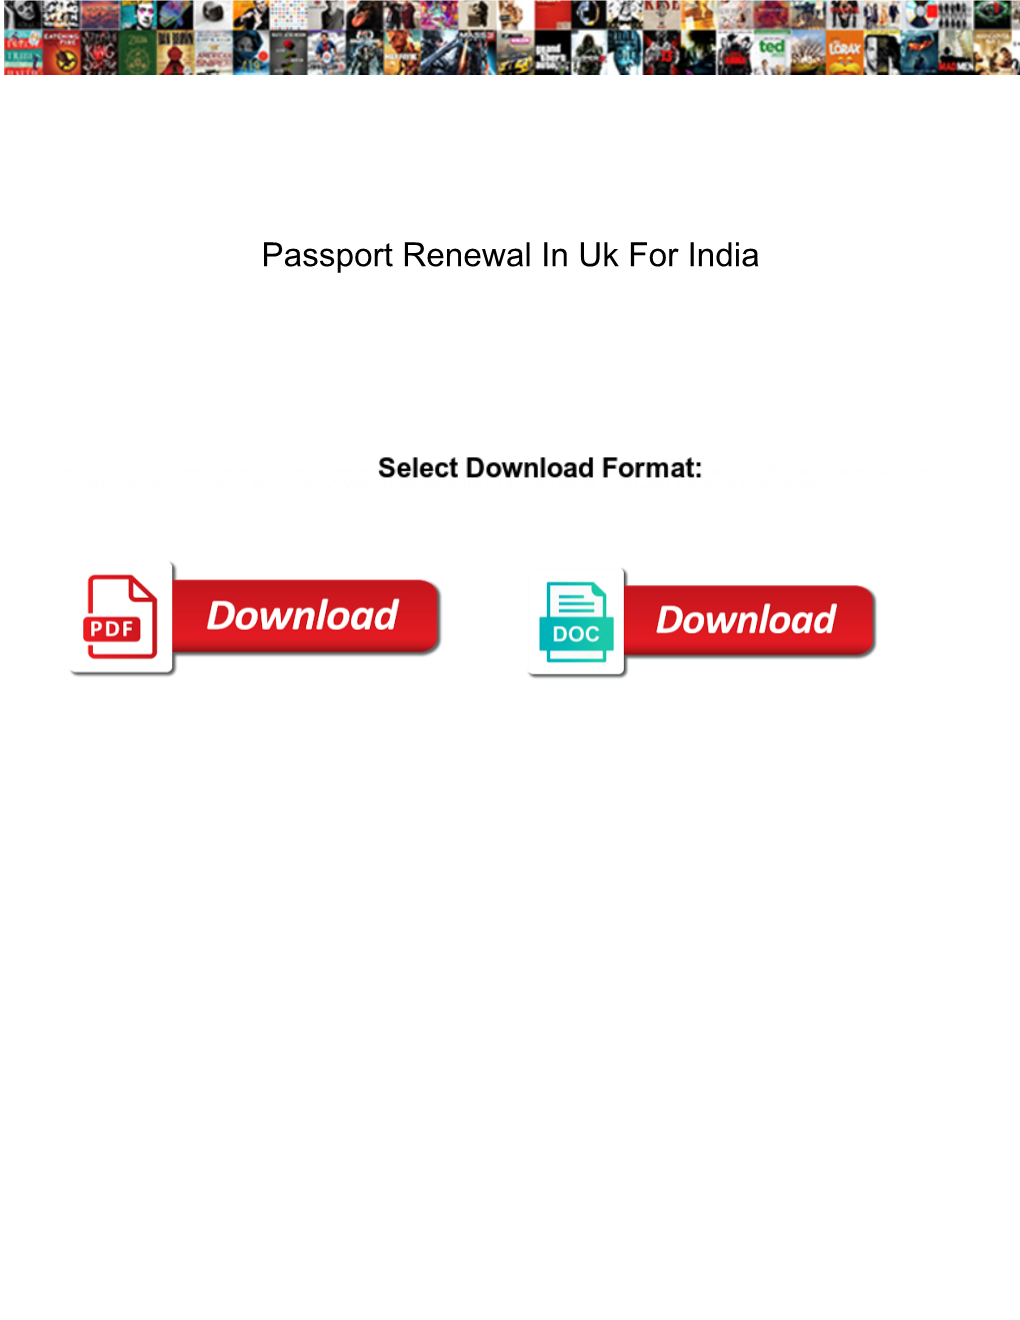 Passport Renewal in Uk for India